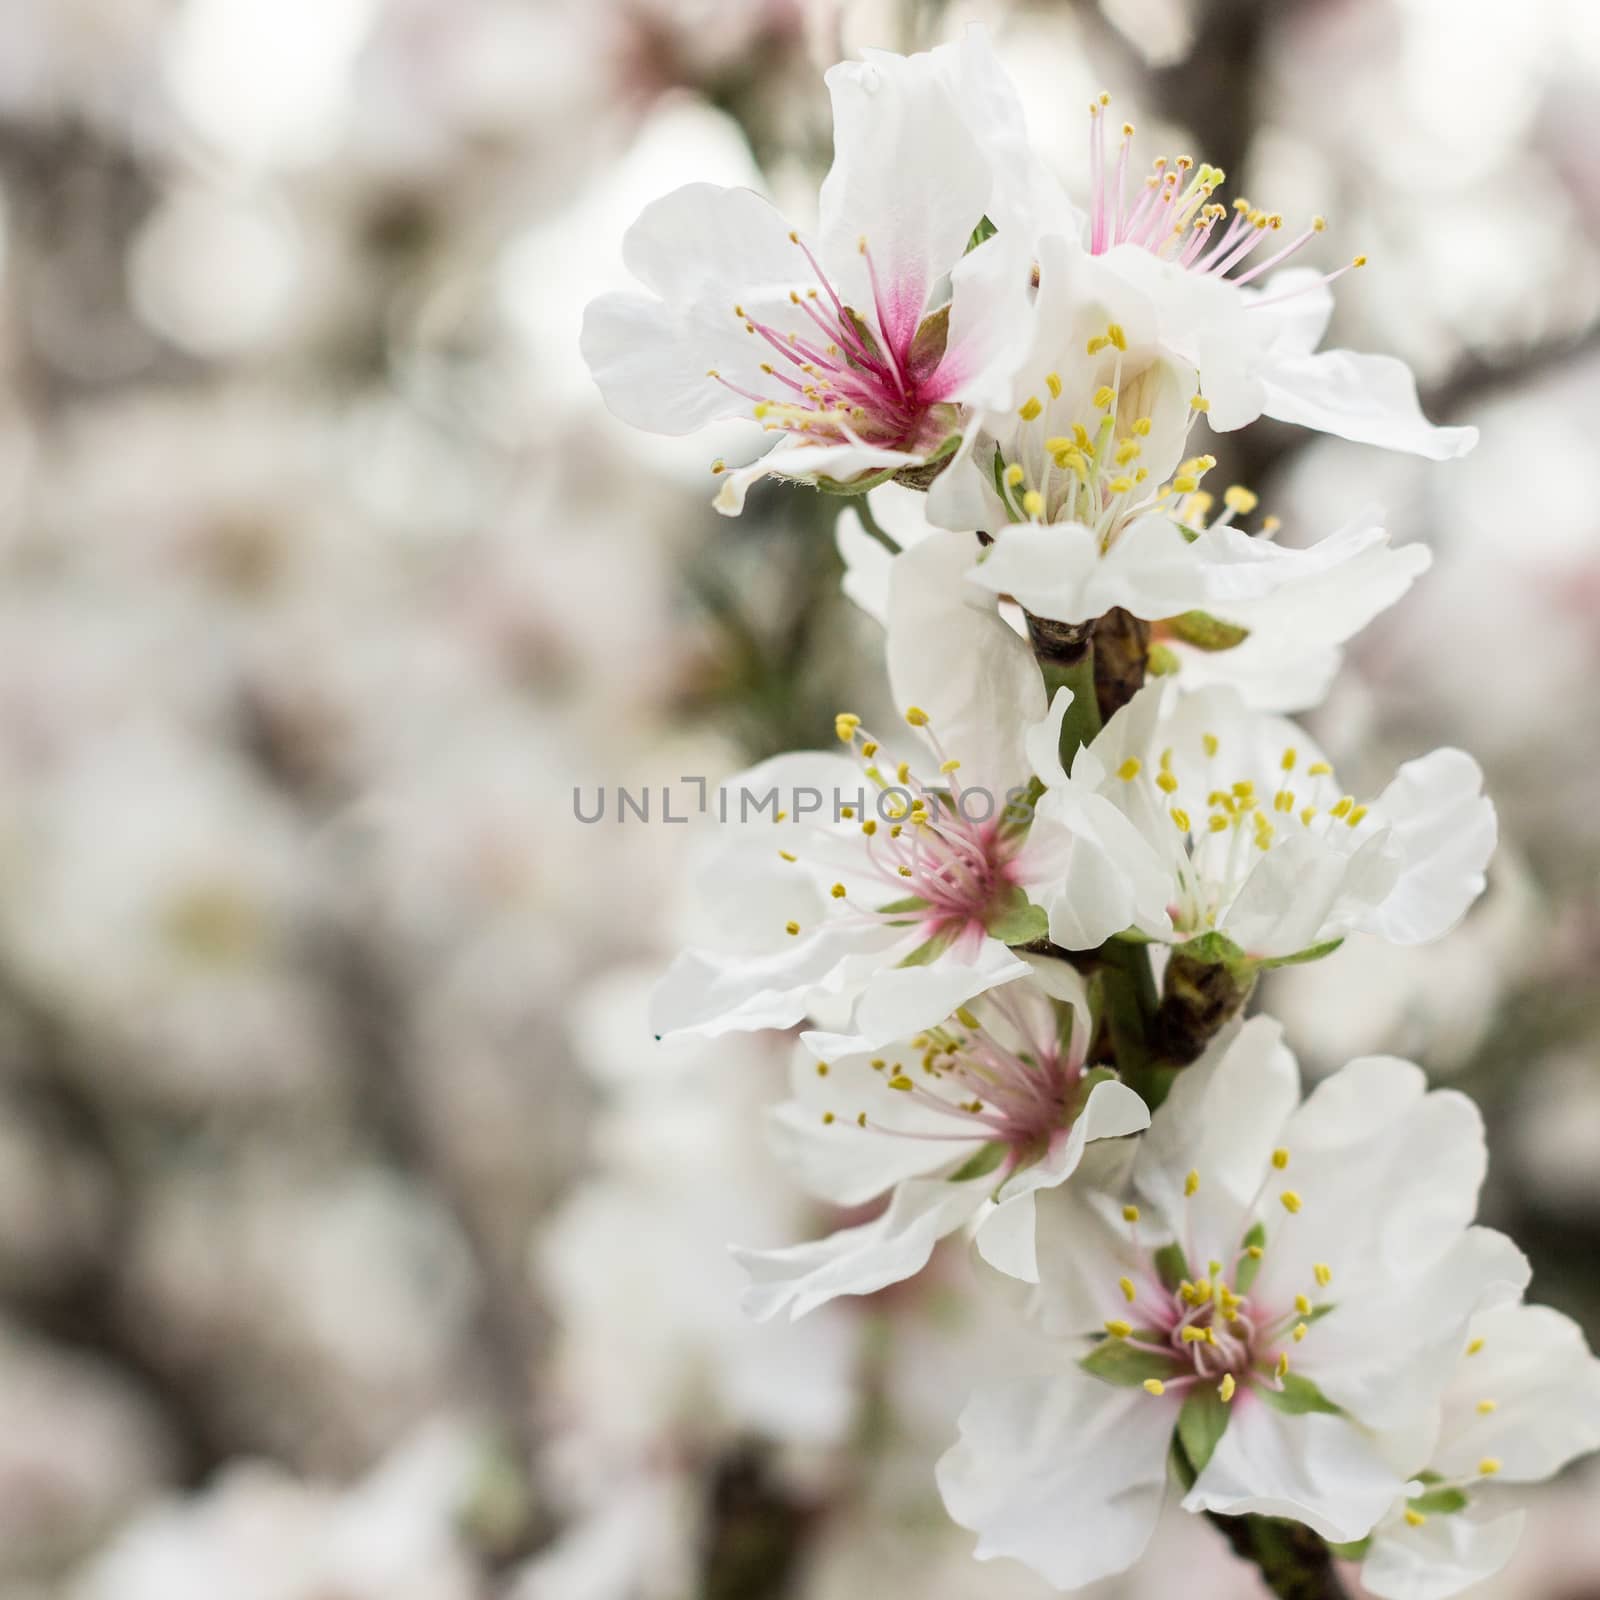 The almond blossom by alanstix64